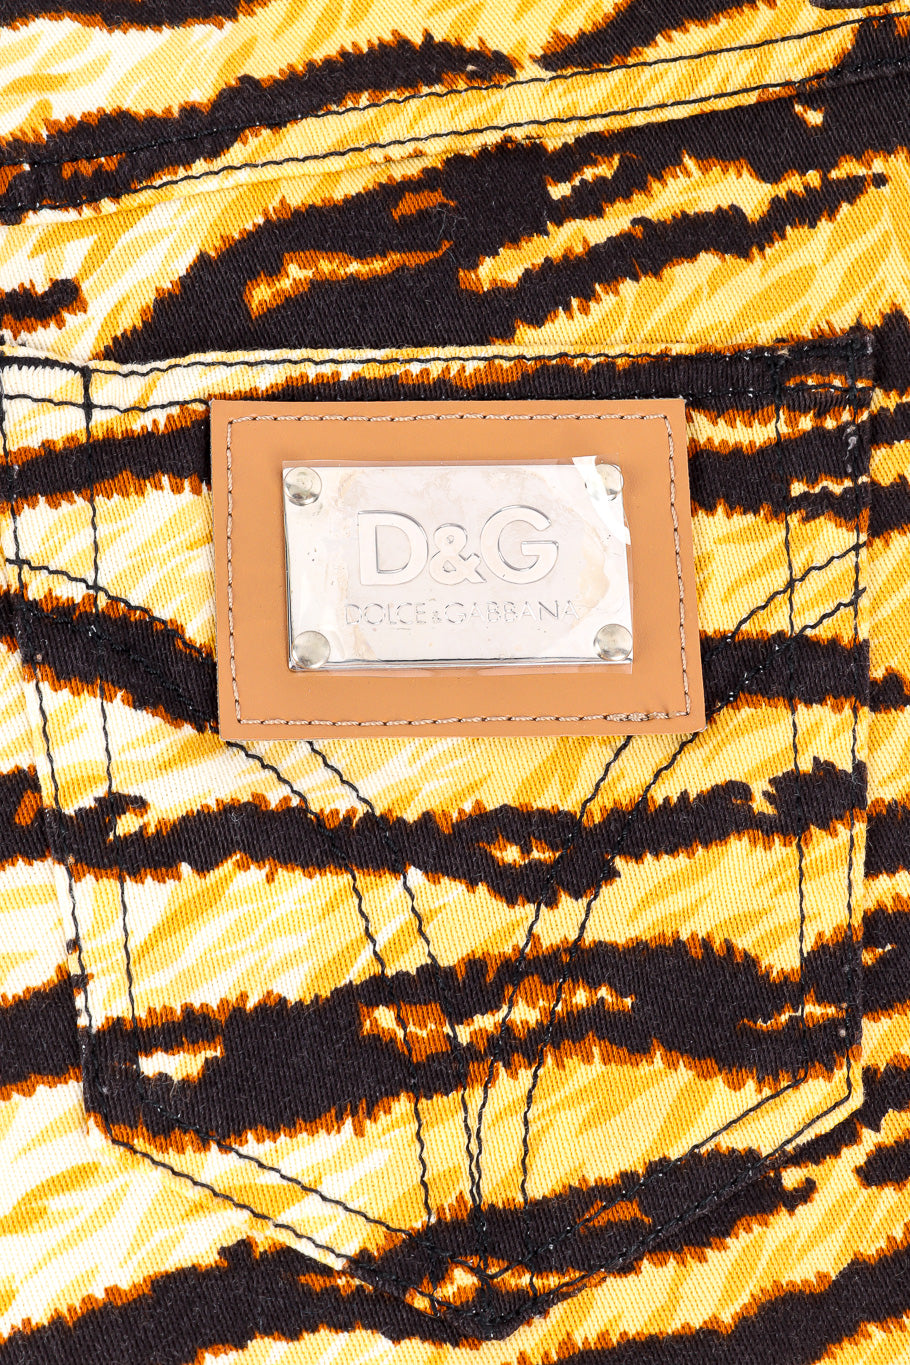 Dolce & Gabbana cotton animal skirt designer silver plaque  @recessla